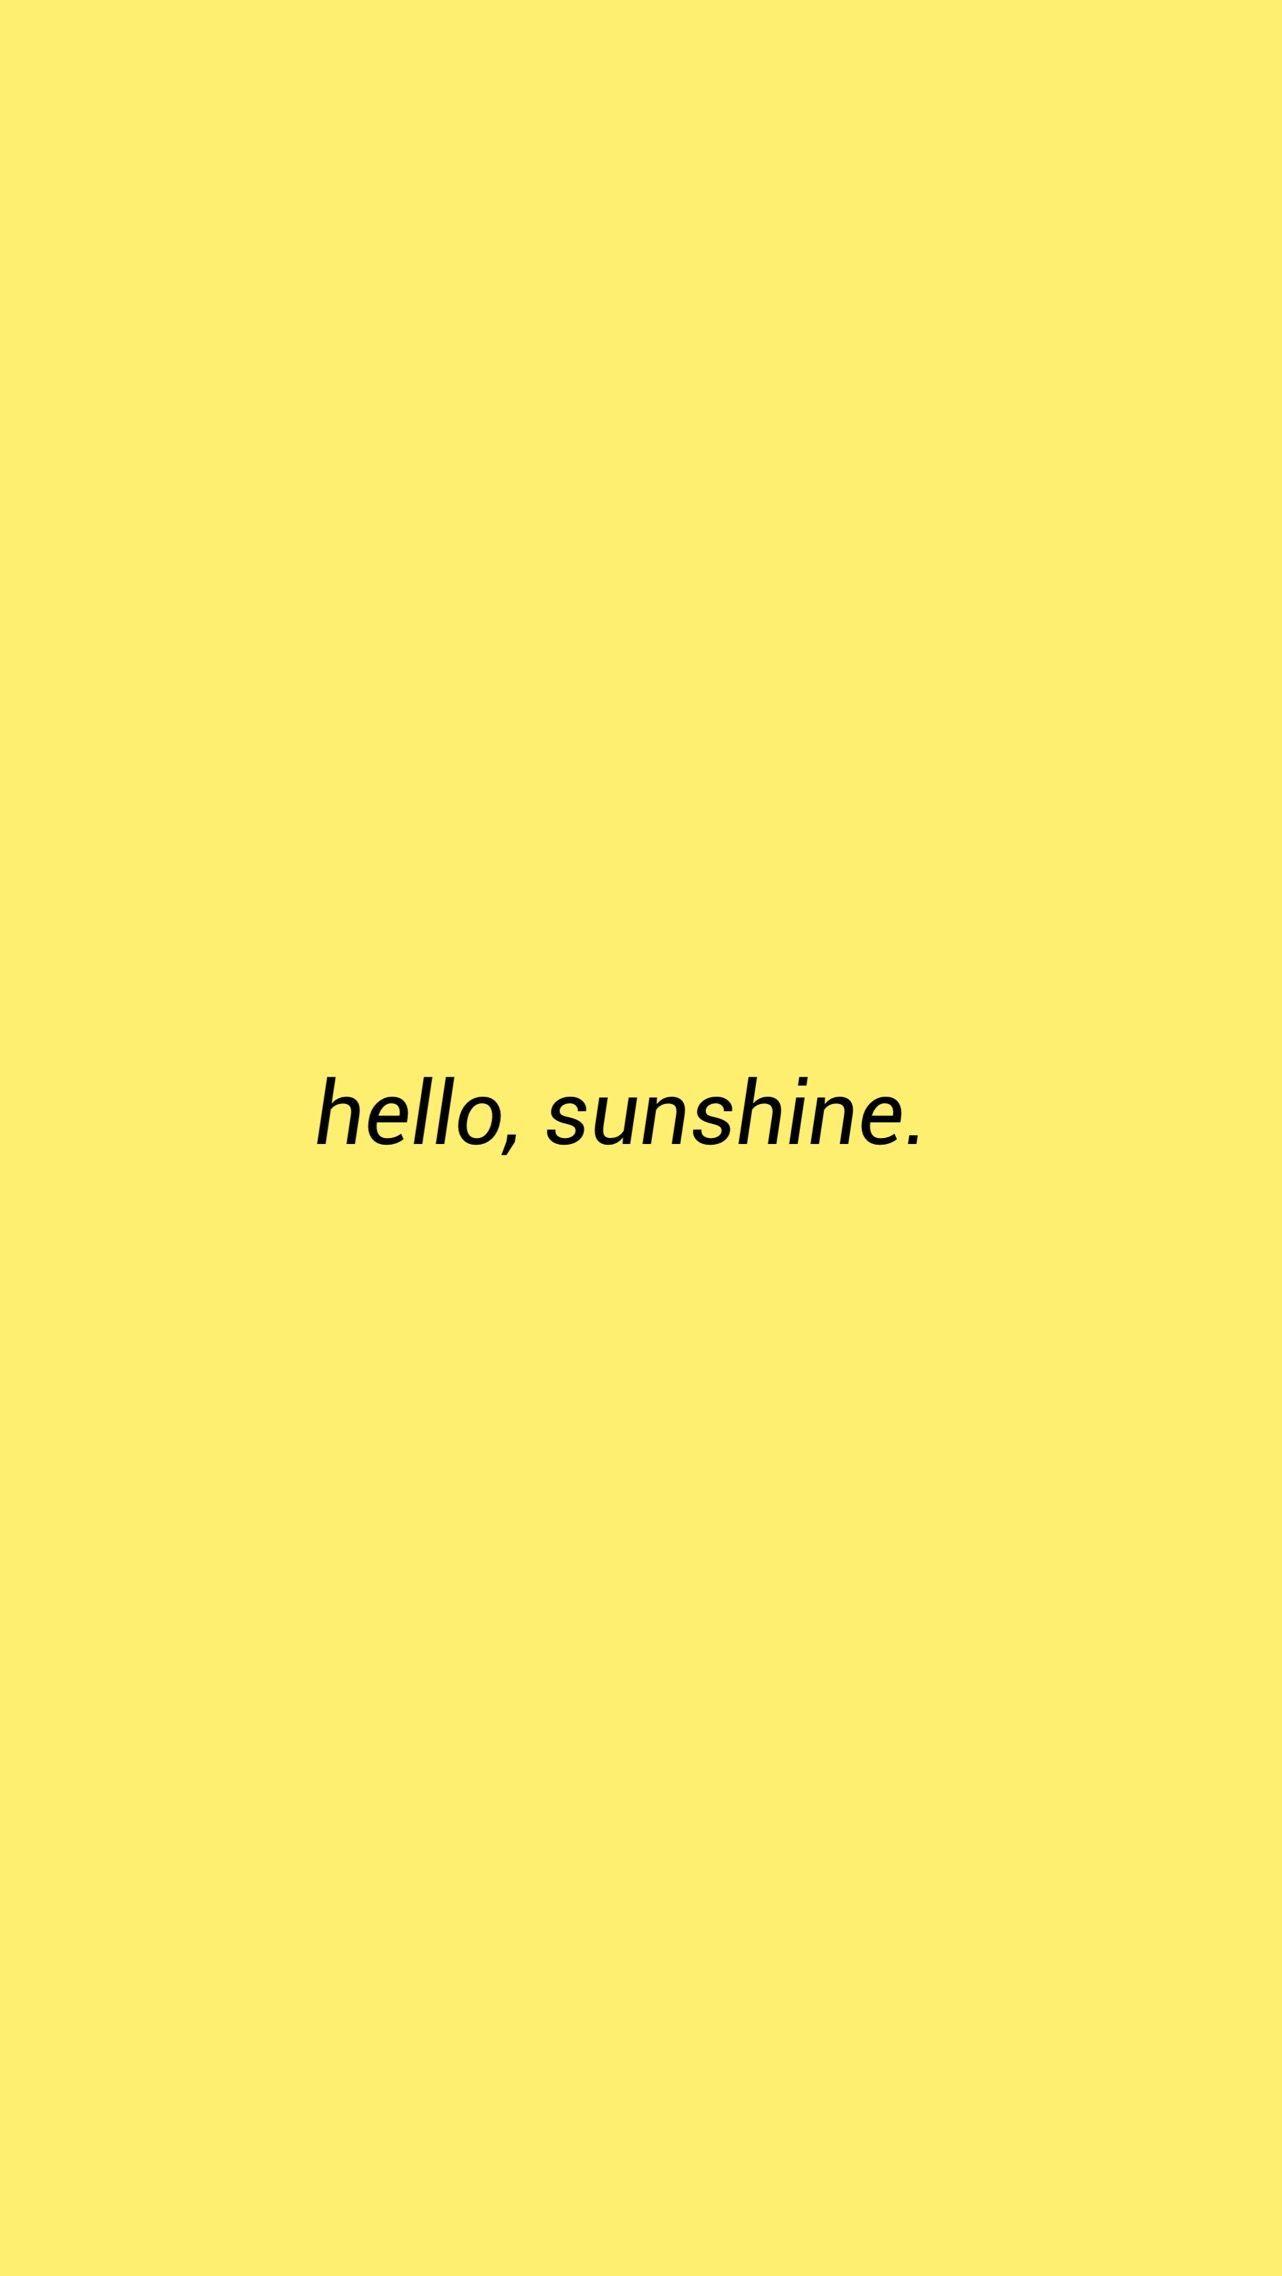 Hello sunshine wallpaper - Light yellow